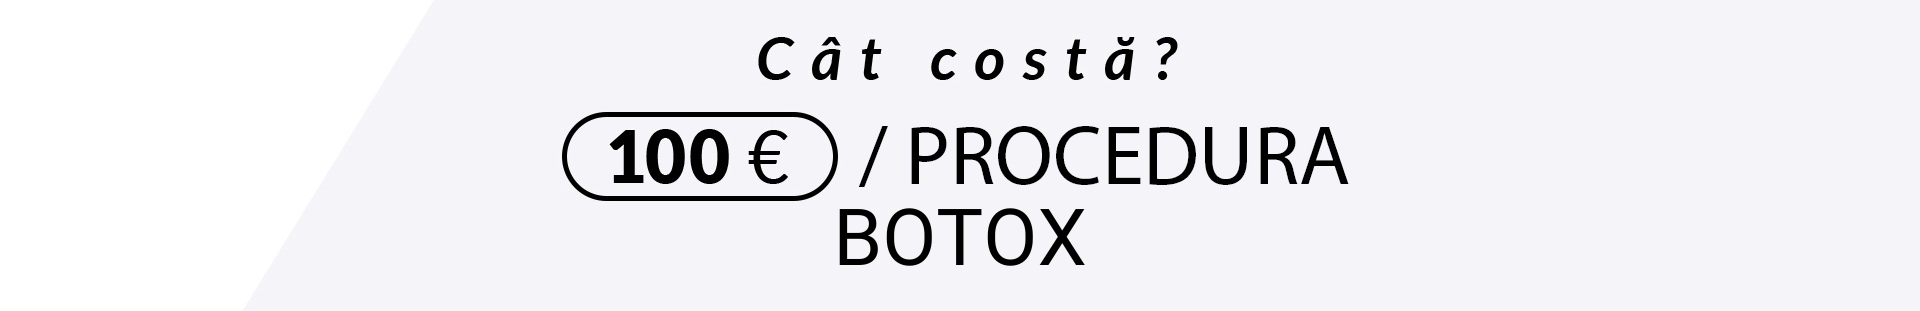 pret procedura botox